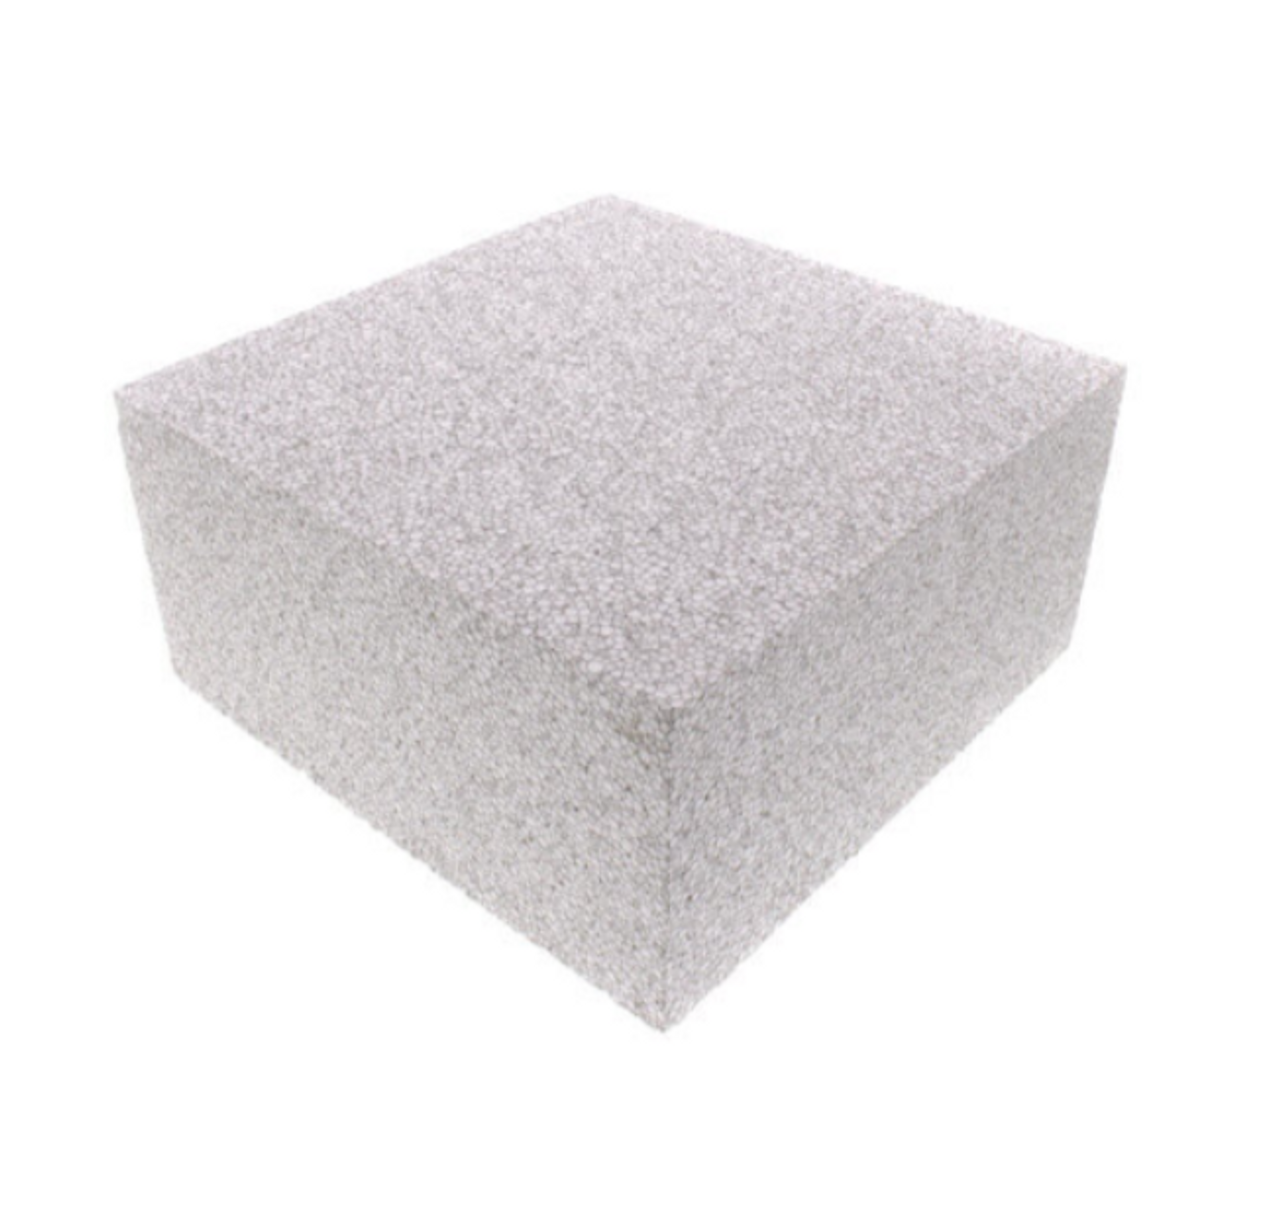 Foam Block 8 x 8 x 4 - Manufactured Duct Supply Company